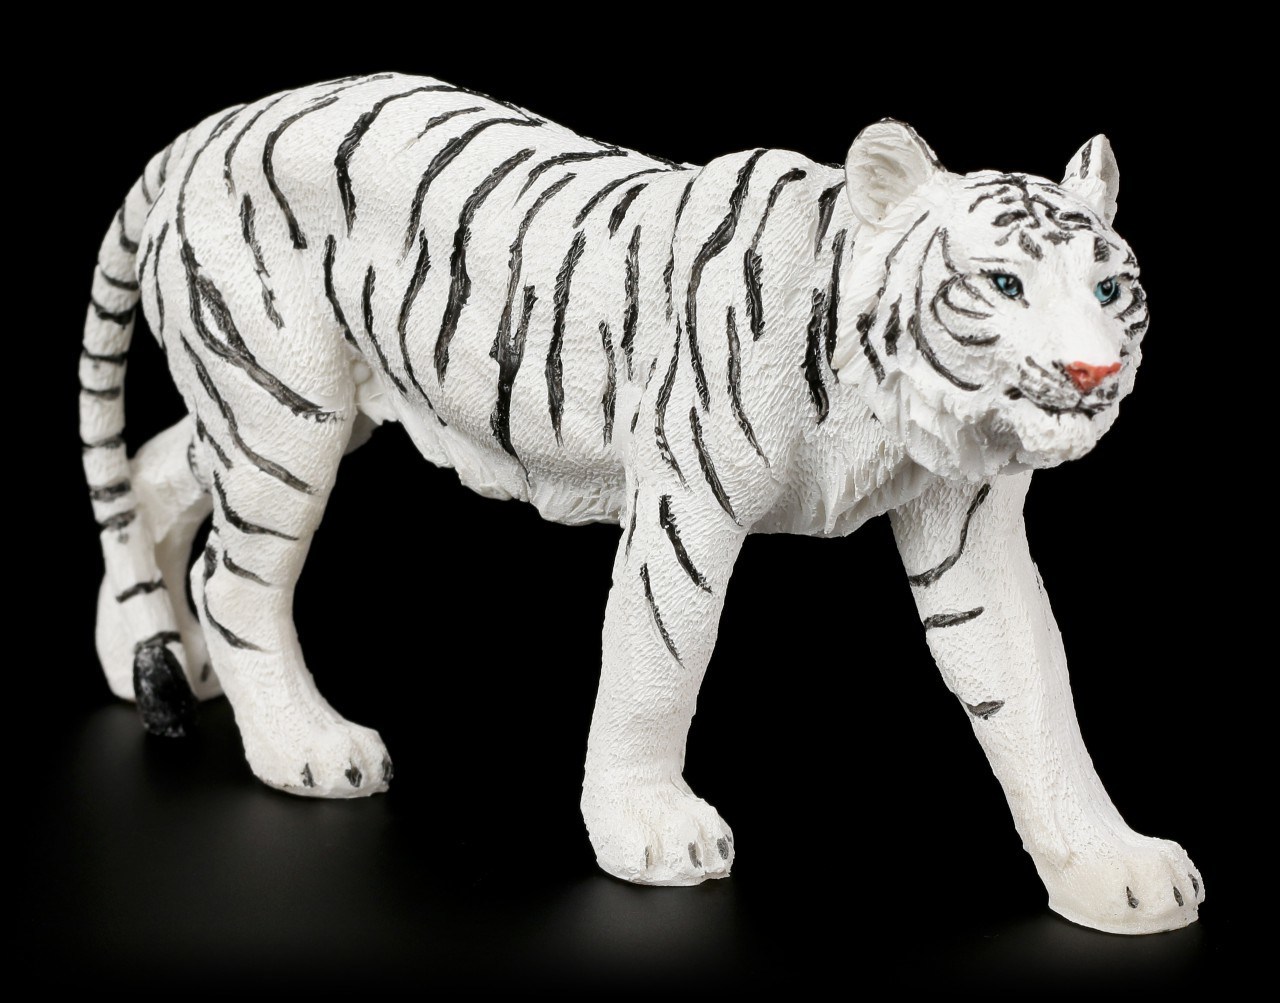 White Tiger Figurine - Walking Small